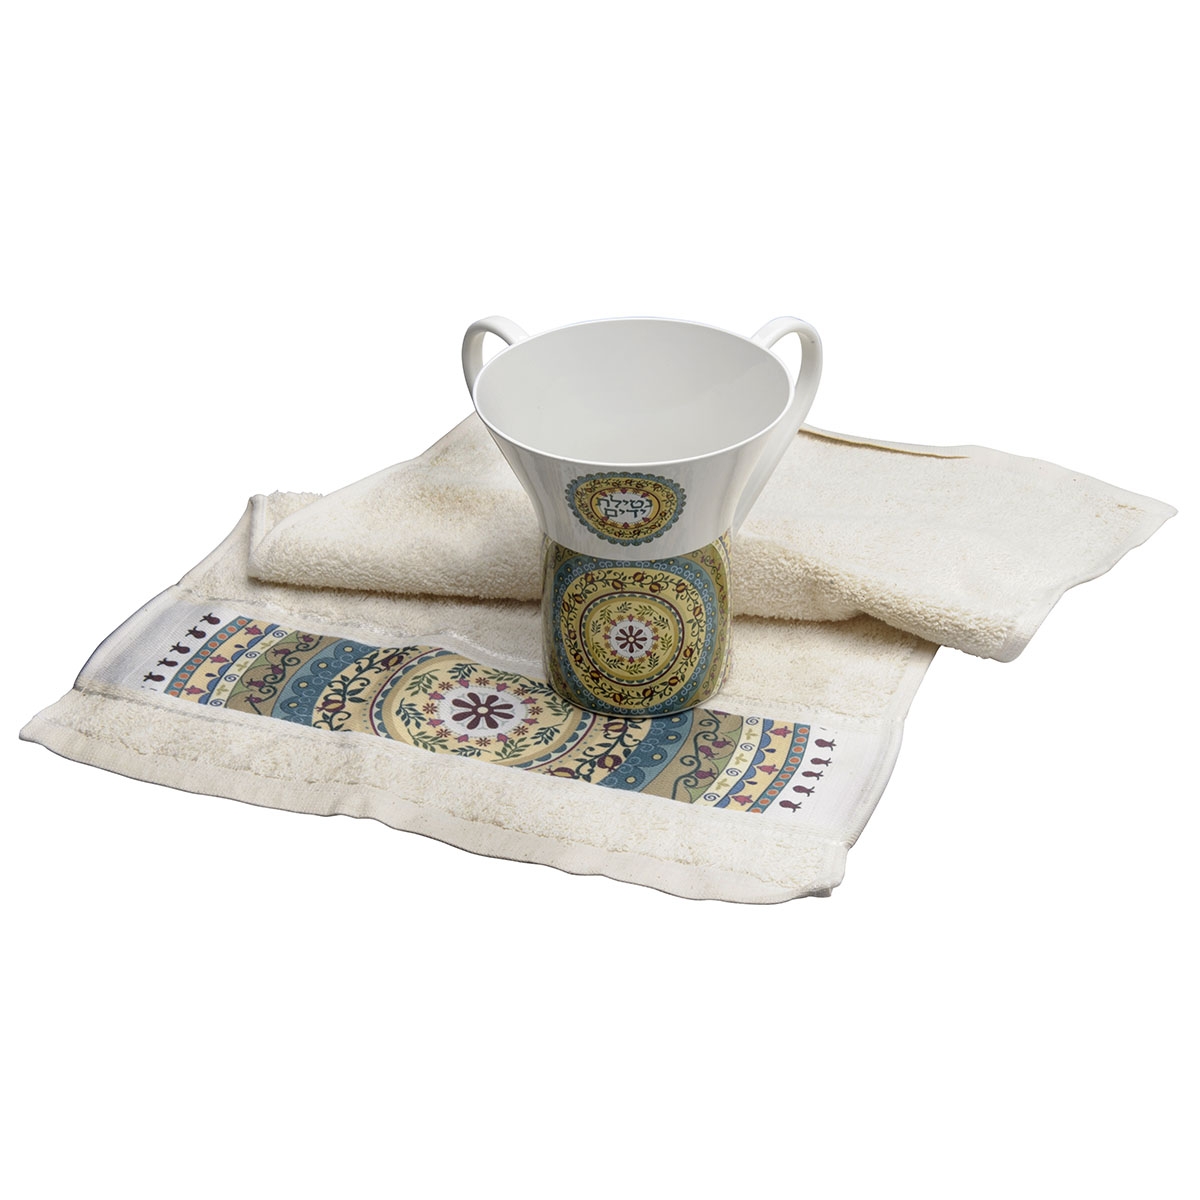 Dorit Judaica Pomegranate Mandala Netilat Yadayim Towel and Washing Cup Set  - 1